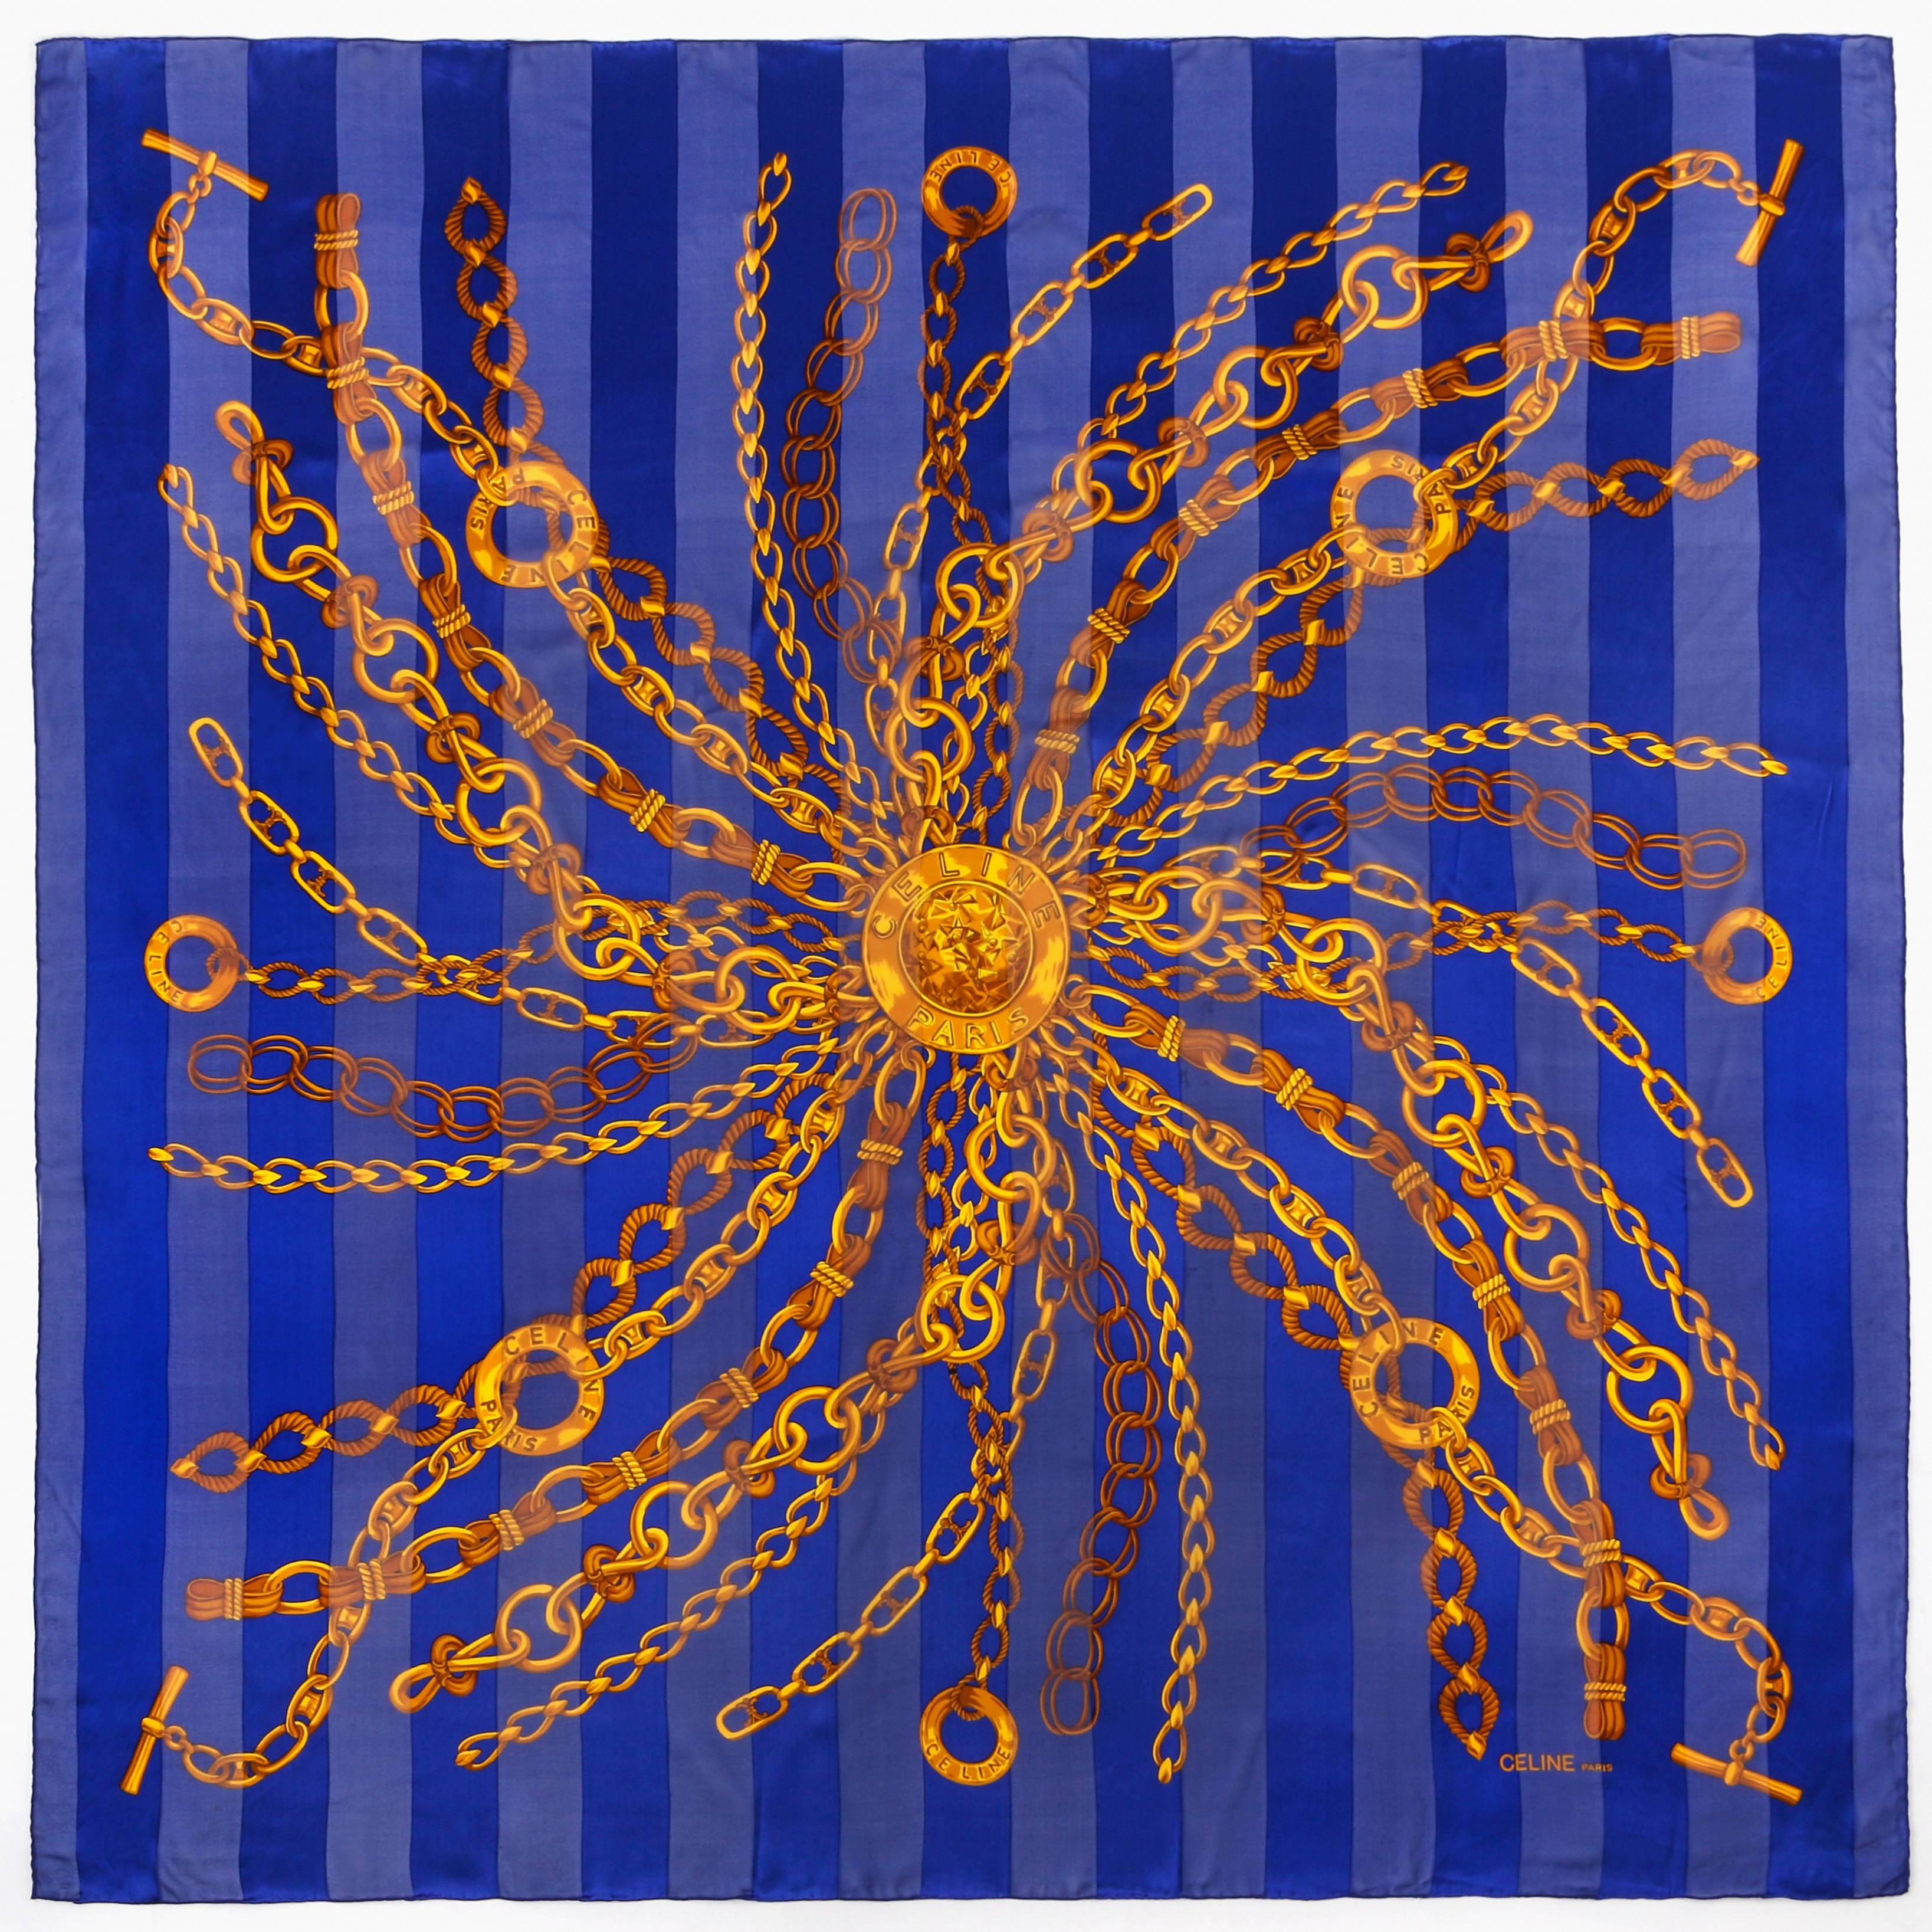 CELINE X-Large Blue Gold 100% Silk Striped Chain Medallion Print Scarf Wrap